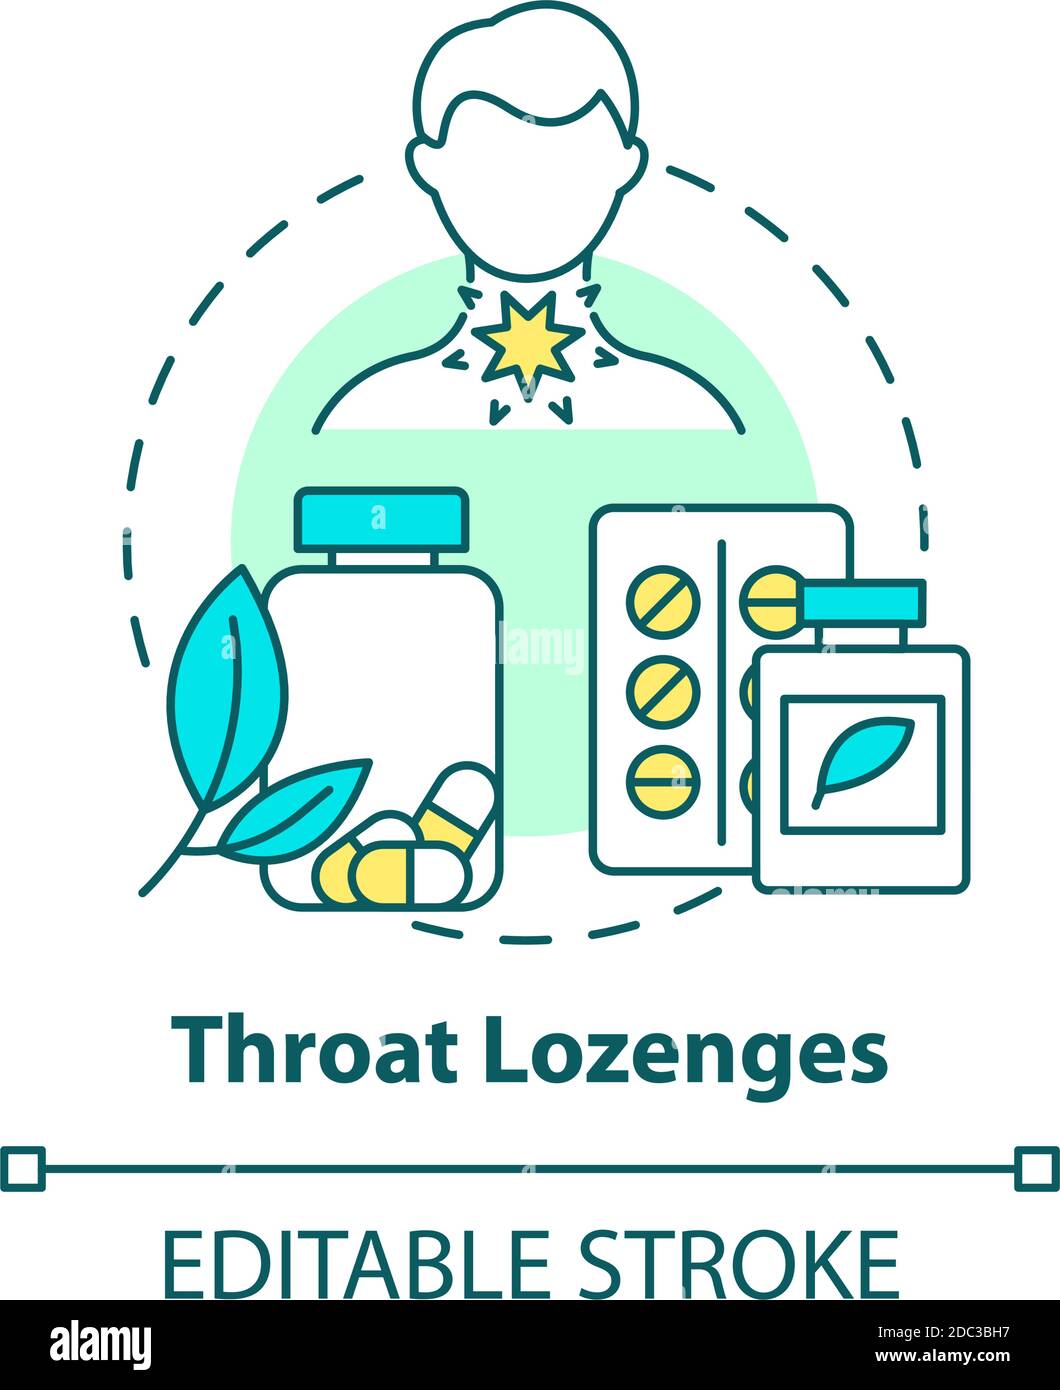 Throat lozenges concept icon Stock Vector